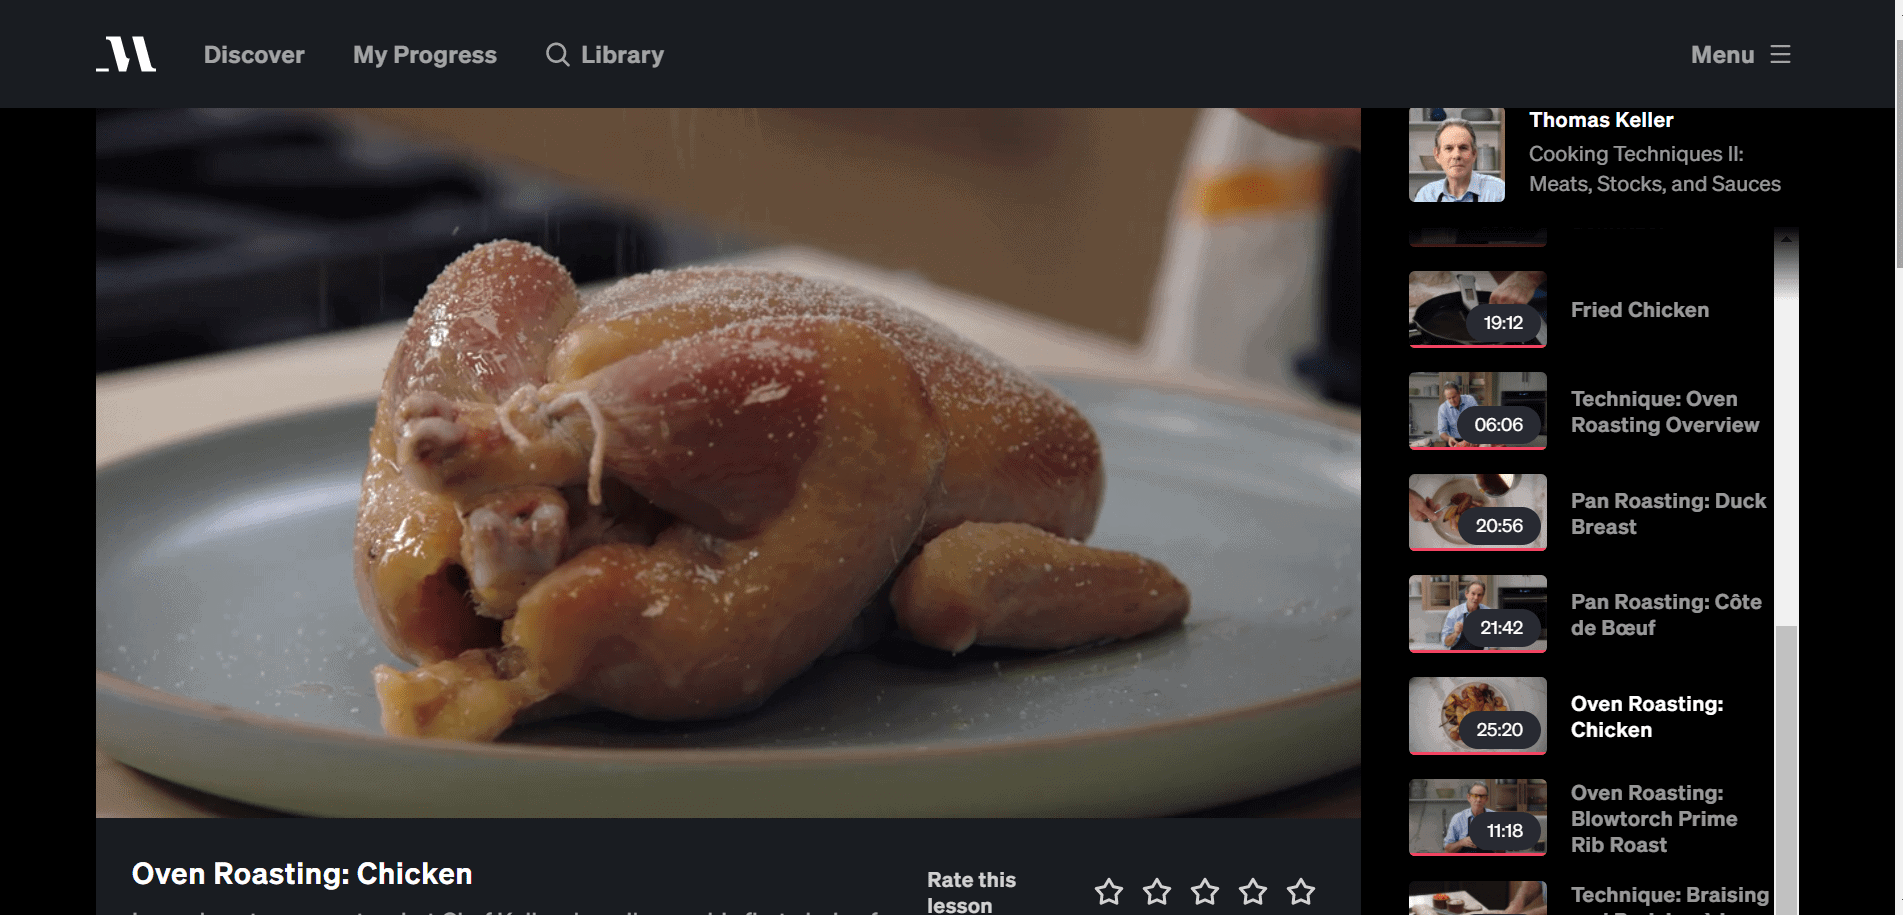 Thomas Keller Teaches over-roasting chicken